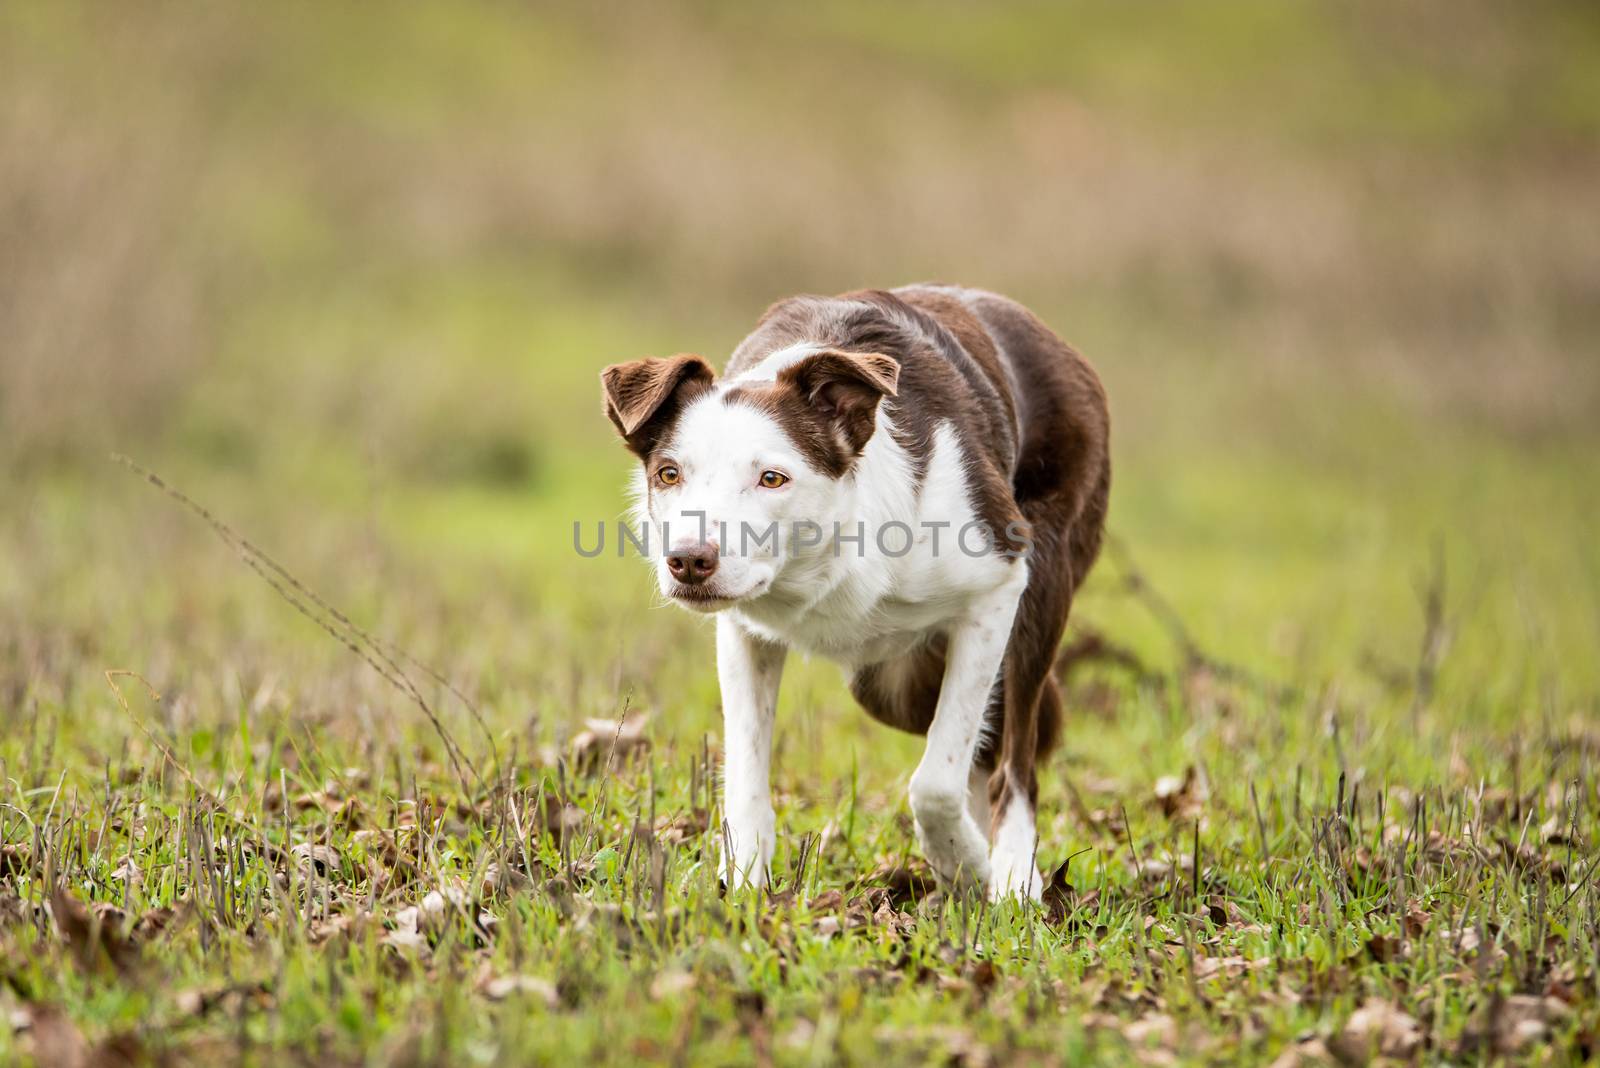 Purebred herding border collie sheepdog in stalking mode posture by Pendleton